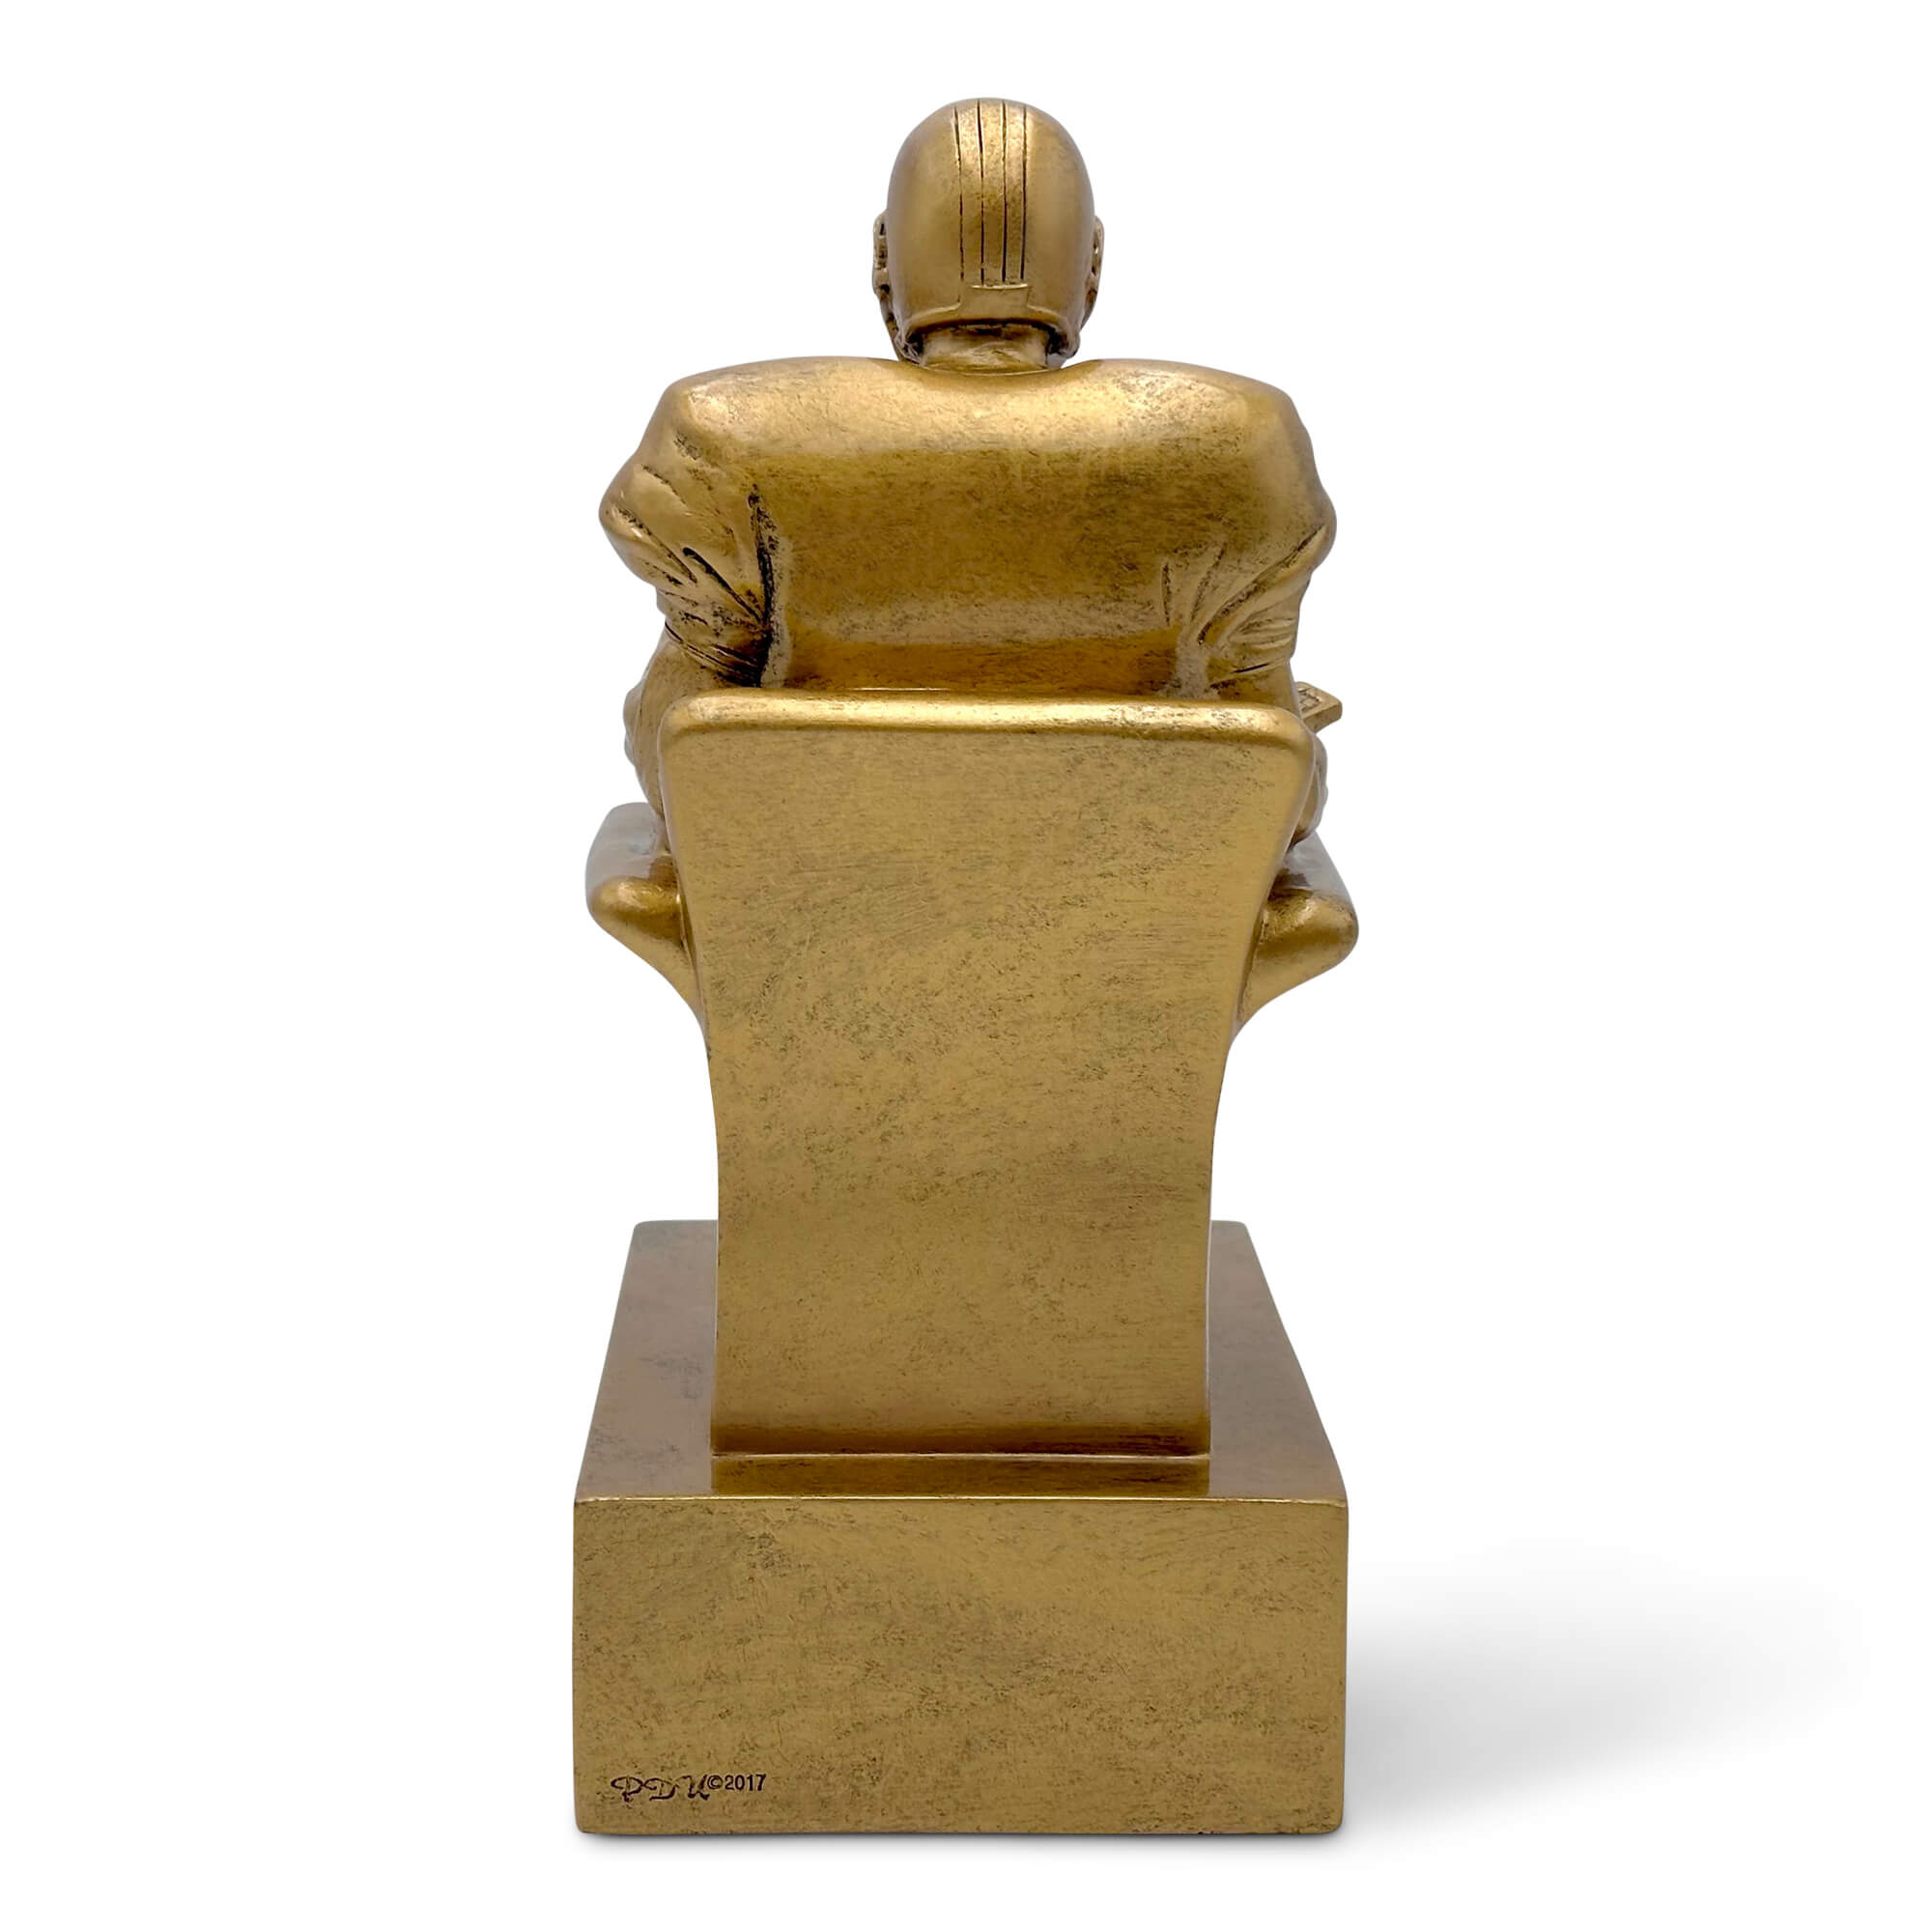 Golden Armchair Trophy - Annual Trophies FantasyJocks   